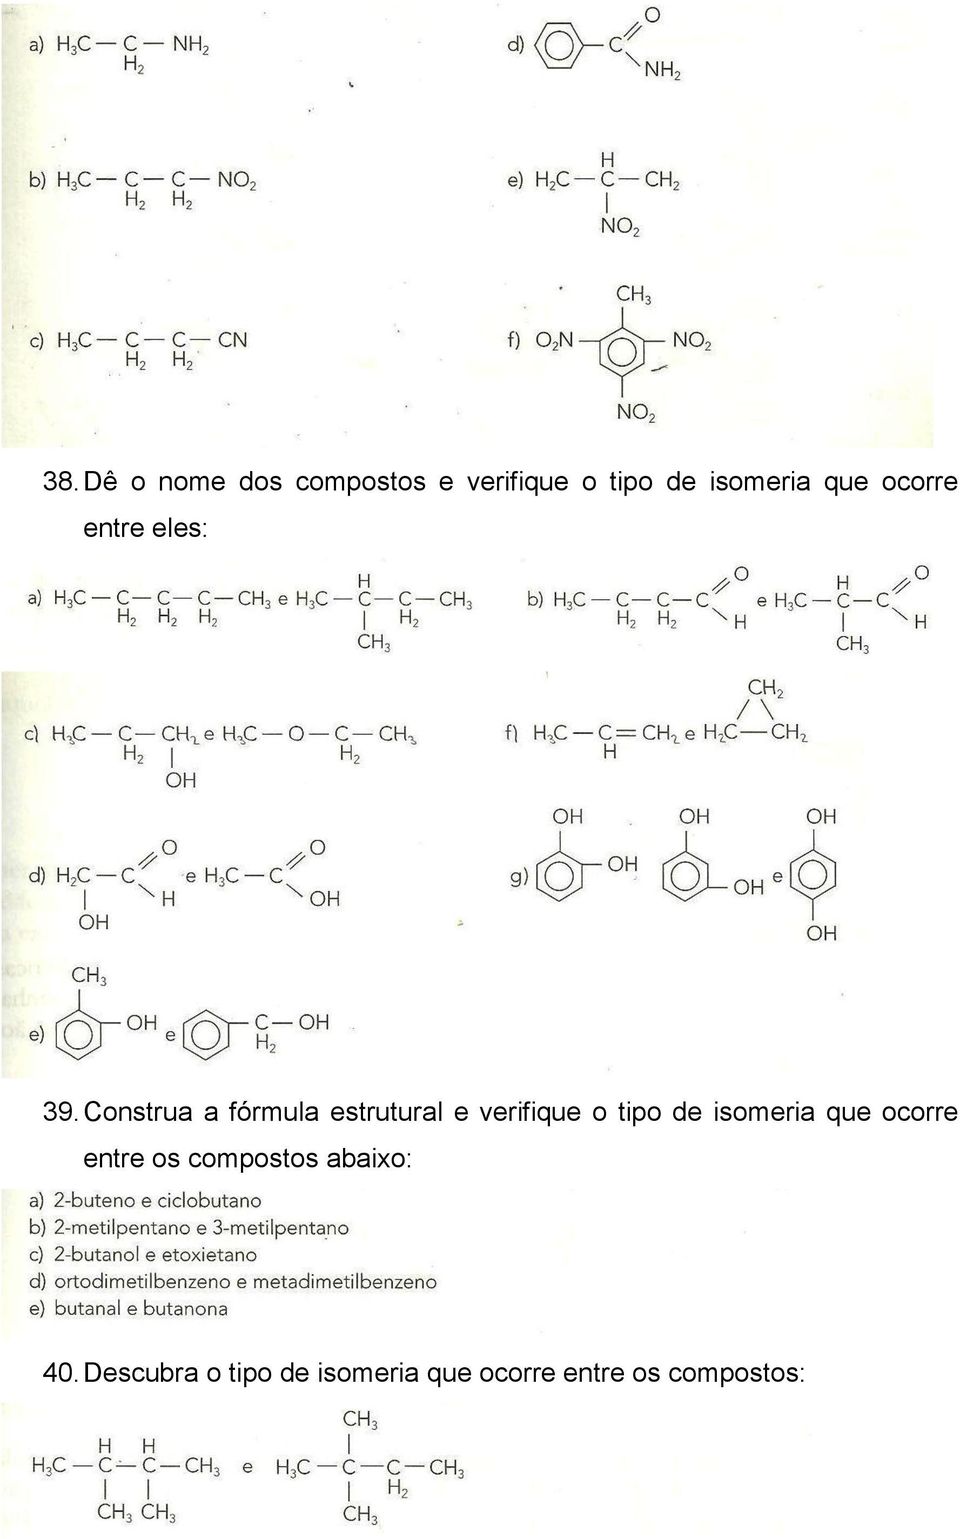 Construa a fórmula estrutural e verifique o tipo de isomeria